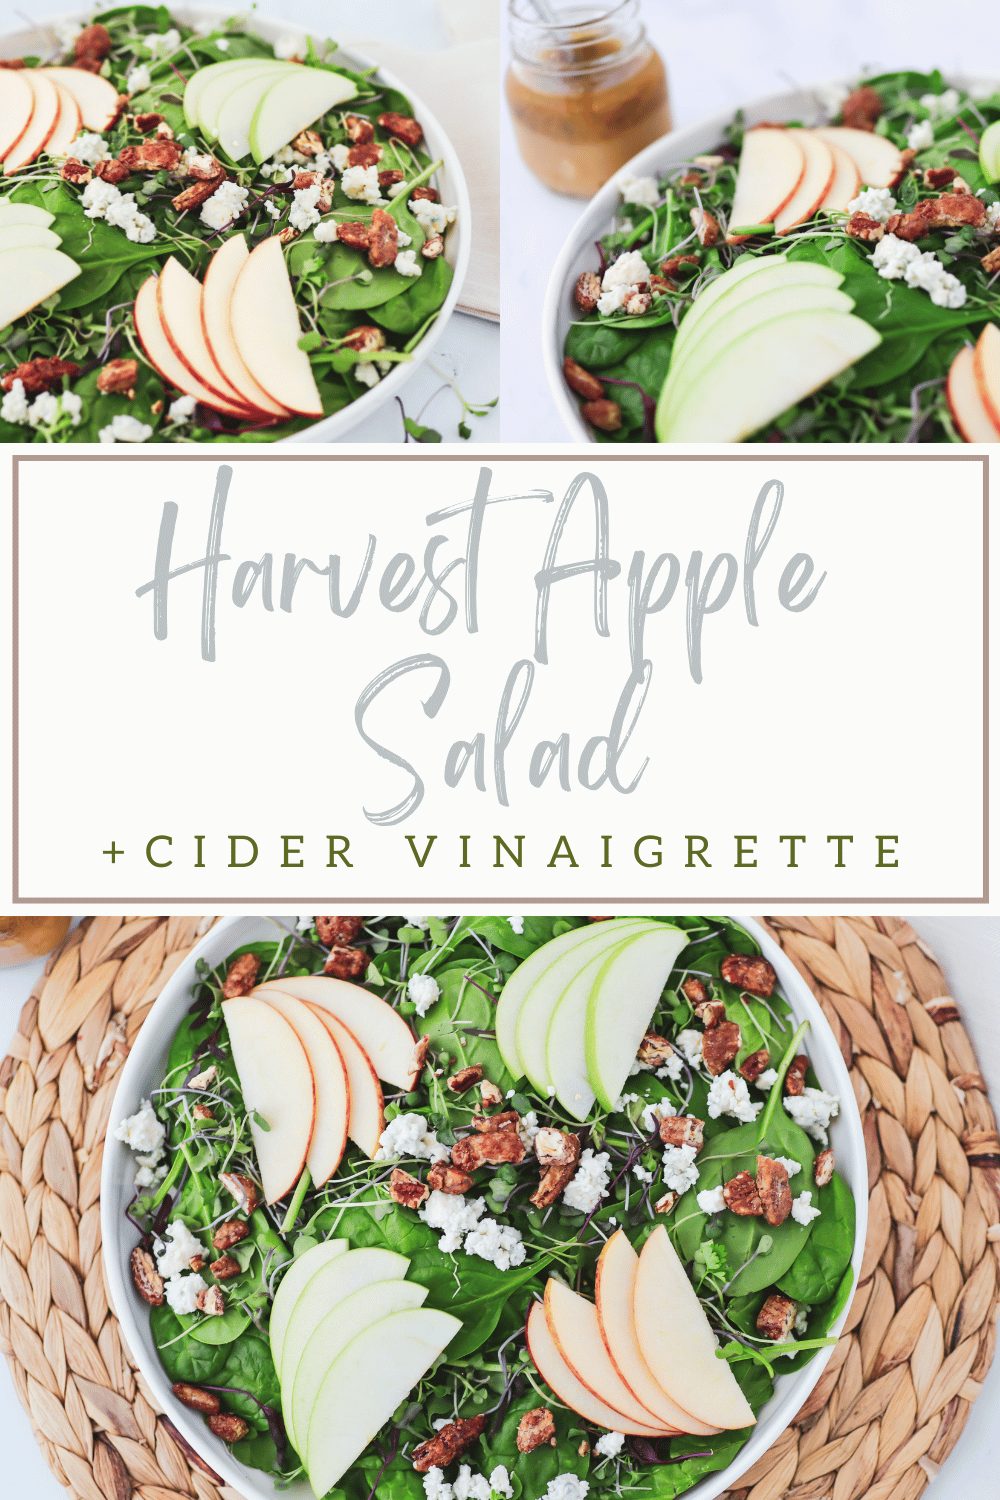 Several images on a Pinterest image that show a harvest apple salad with a side of cider vinaigrette